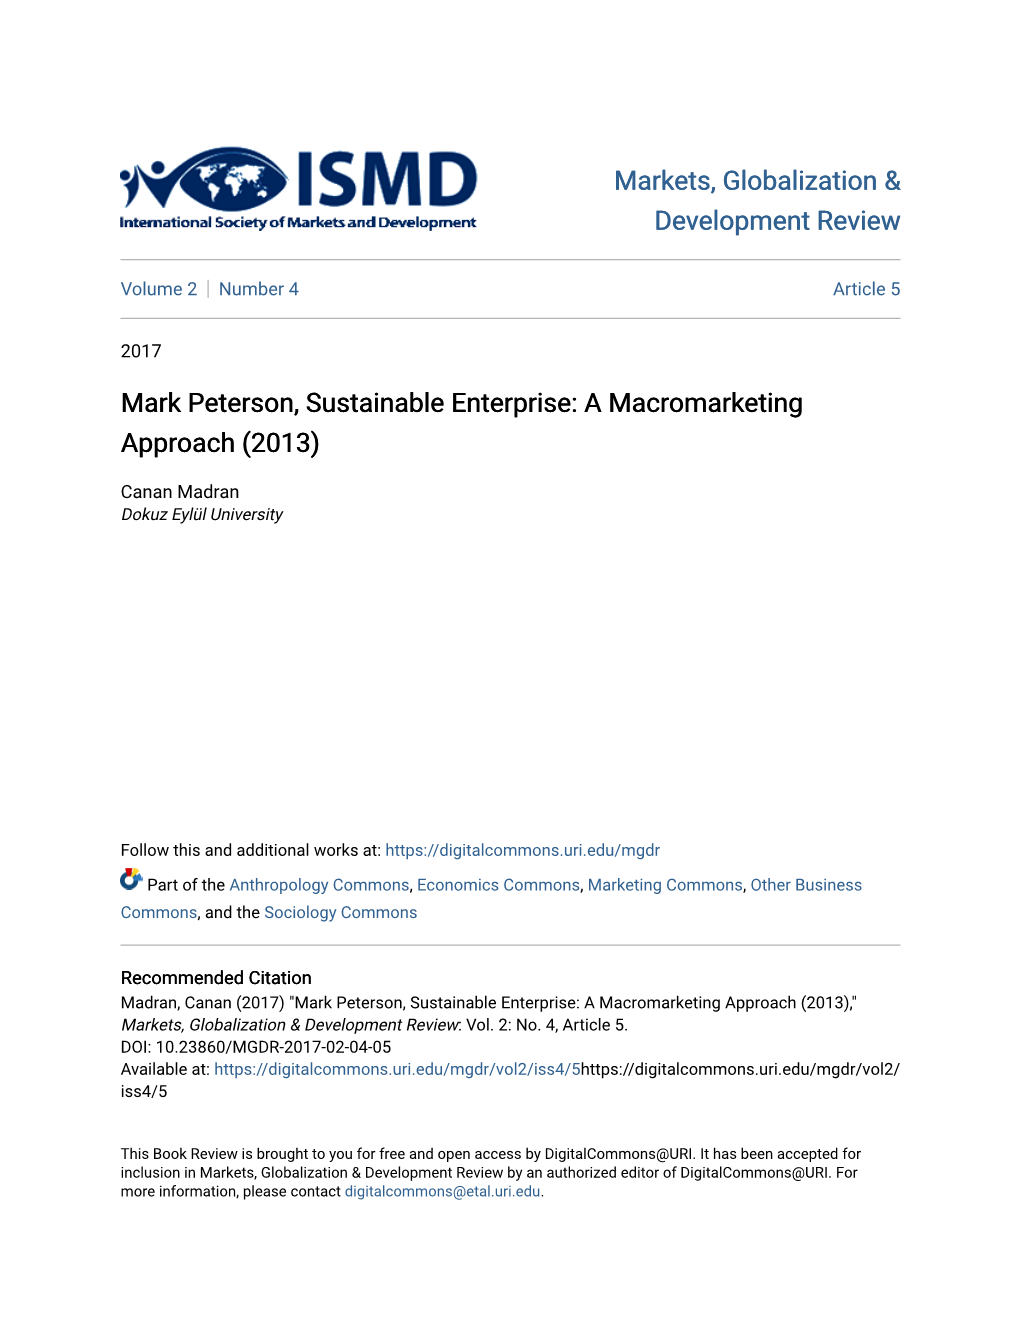 Mark Peterson, Sustainable Enterprise: a Macromarketing Approach (2013)